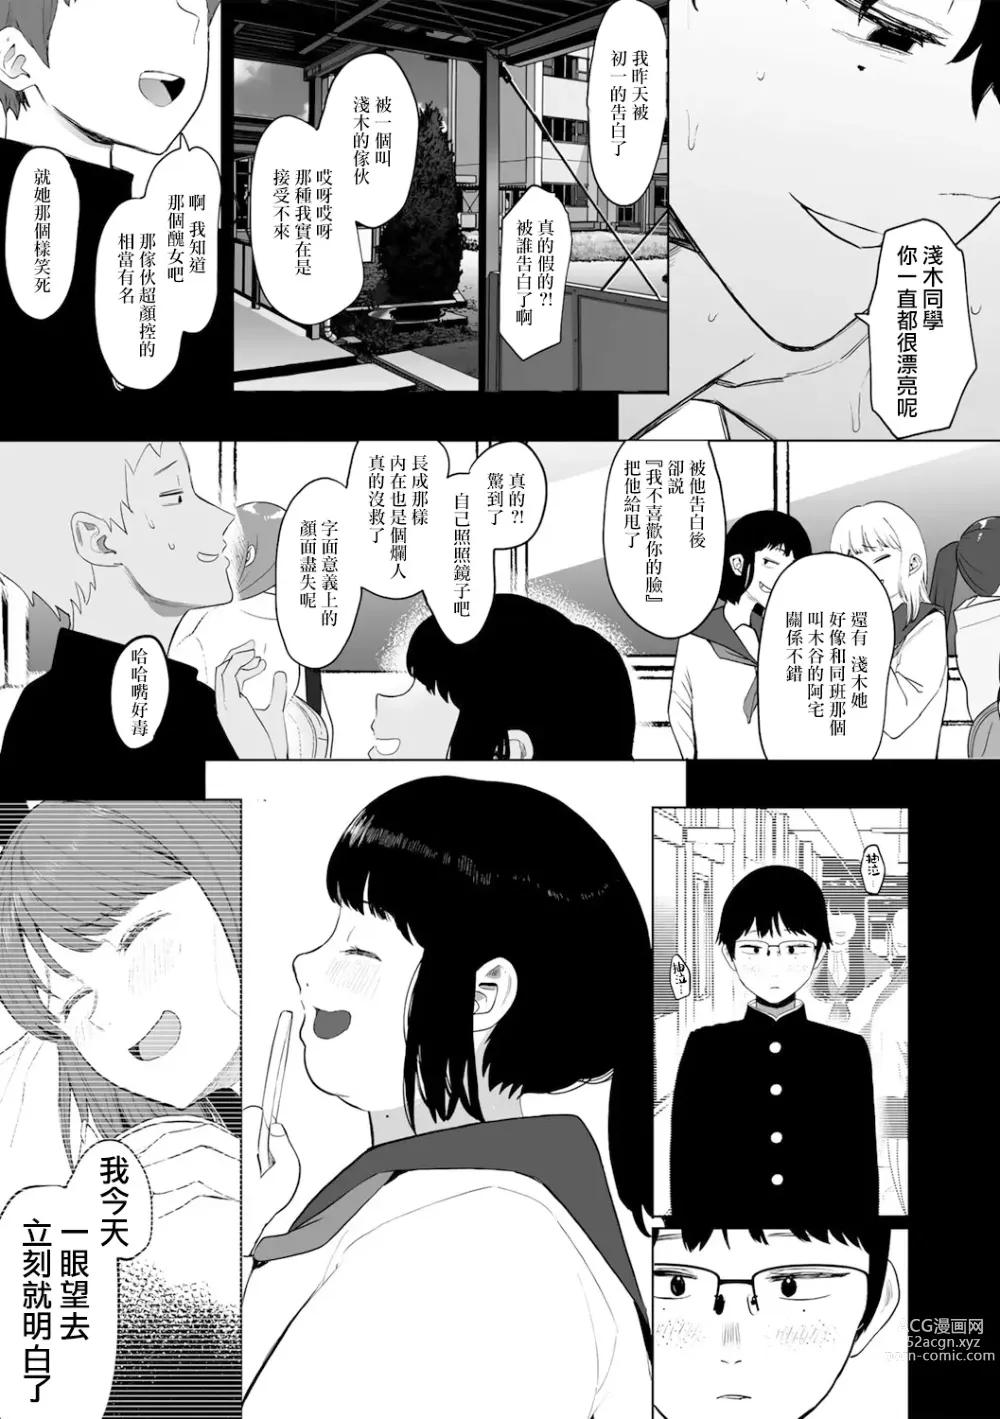 Page 22 of manga 都内/JD/优质110